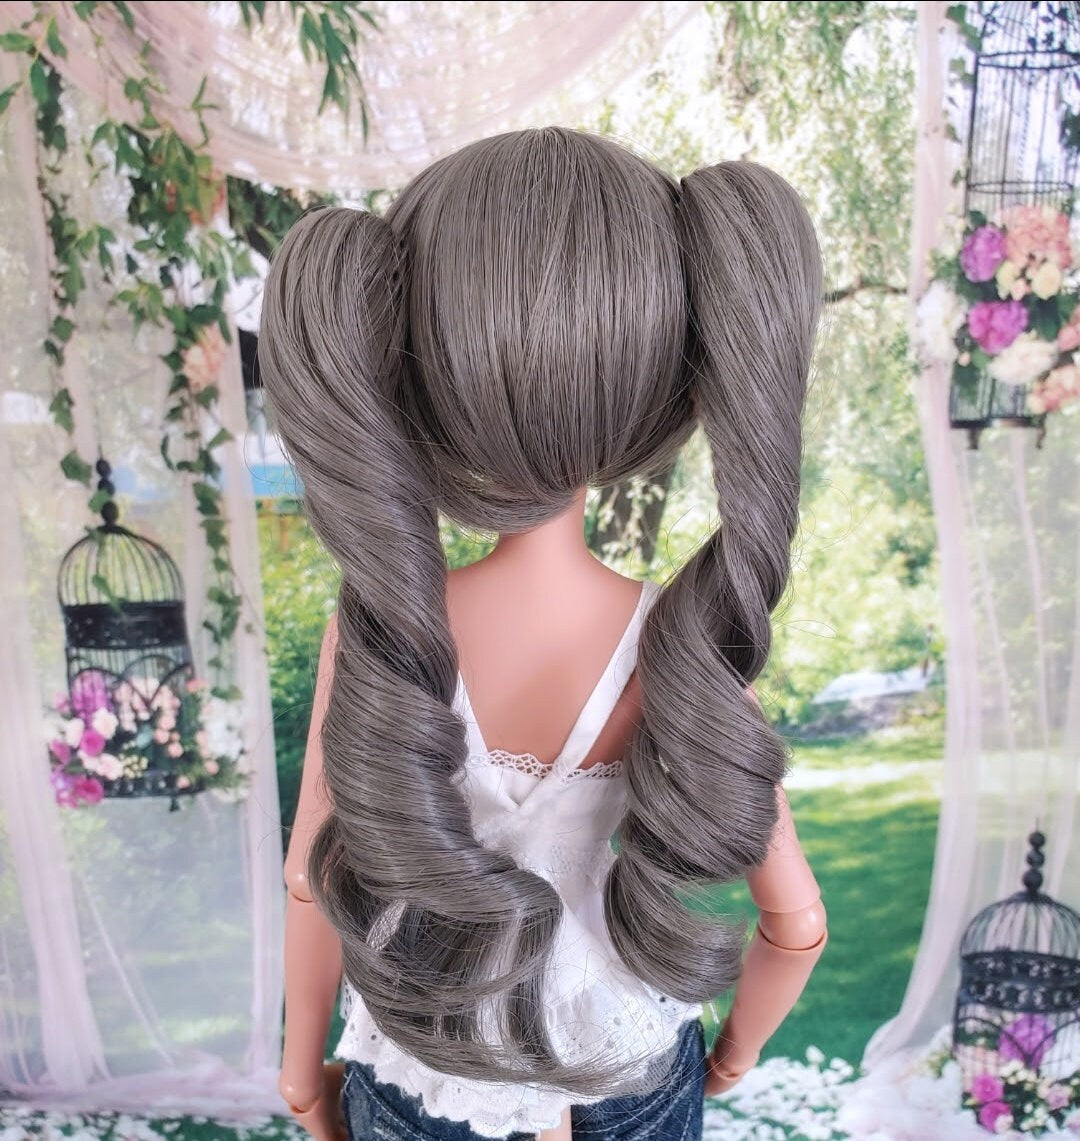 Custom doll WIG for Smart Dolls- Heat Safe - Tangle Resistant- 8.5" head size of Bjd, SD, Dollfie Dream dolls Grey ponytails removeable